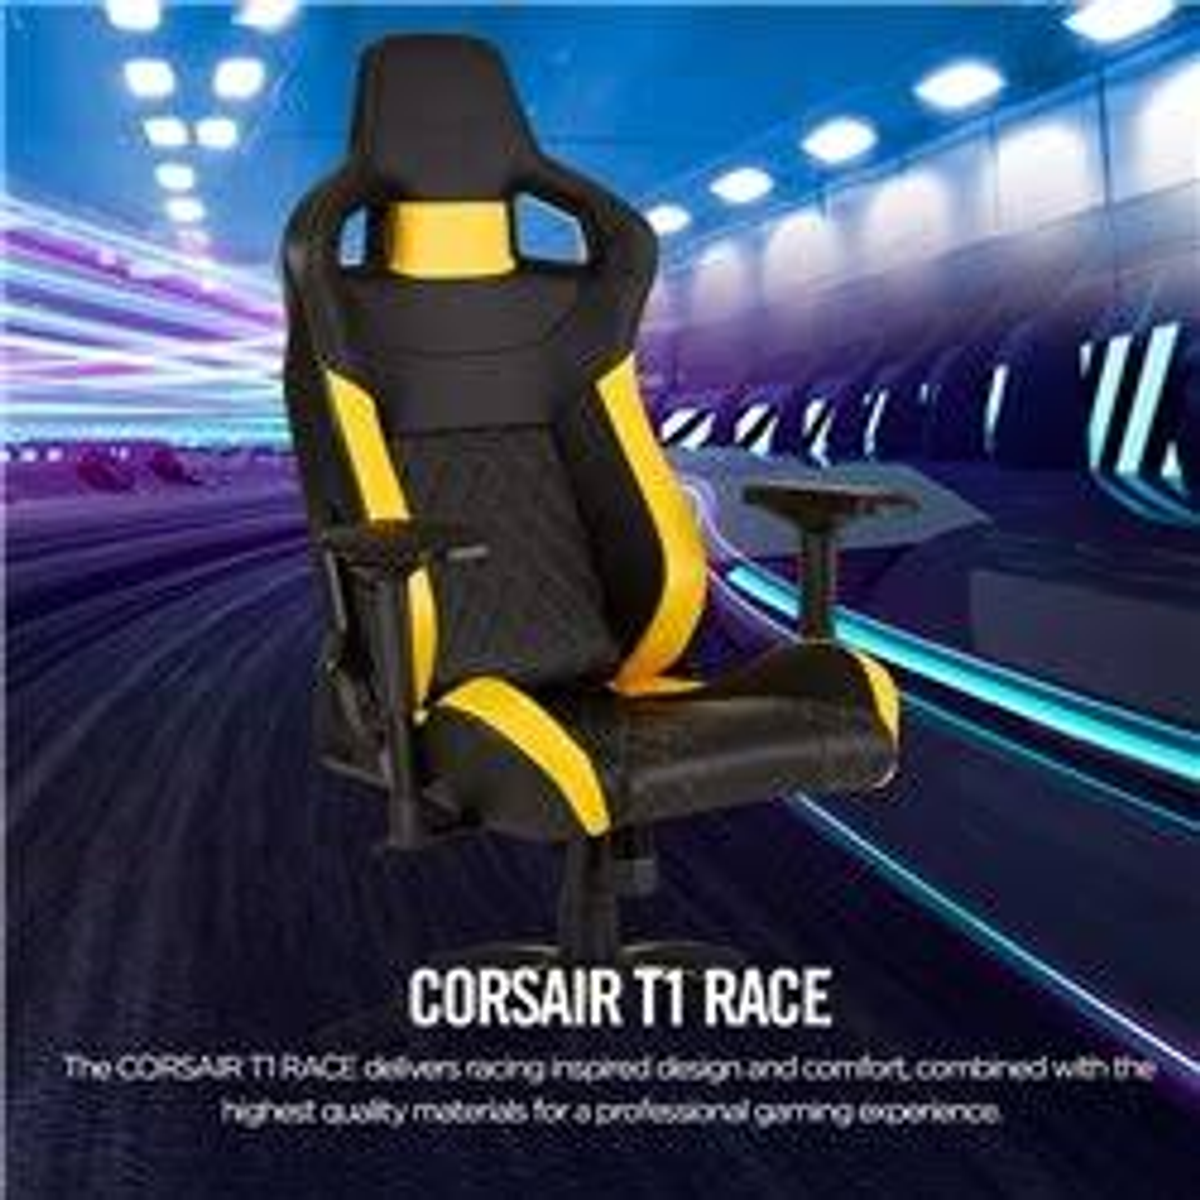 CORSAIR CF-9010015-WW T1 RACE 2018 Stuhl, CHAIR Schwarz/Gelb BLACK/YELLOW Gaming